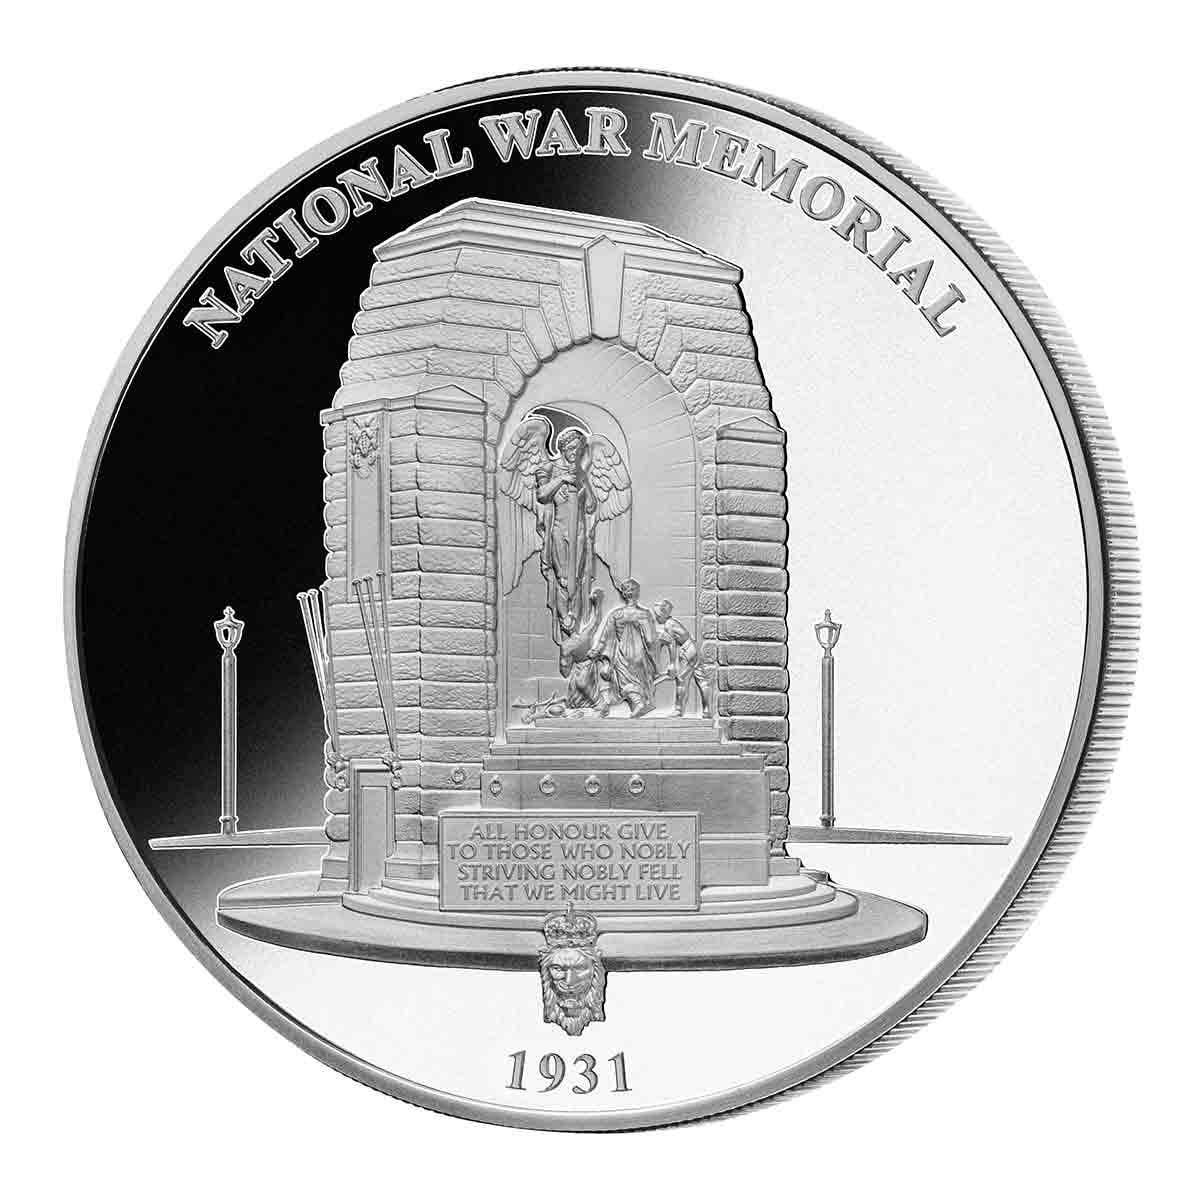 Adelaide War Memorial Silver-plated Commemorative